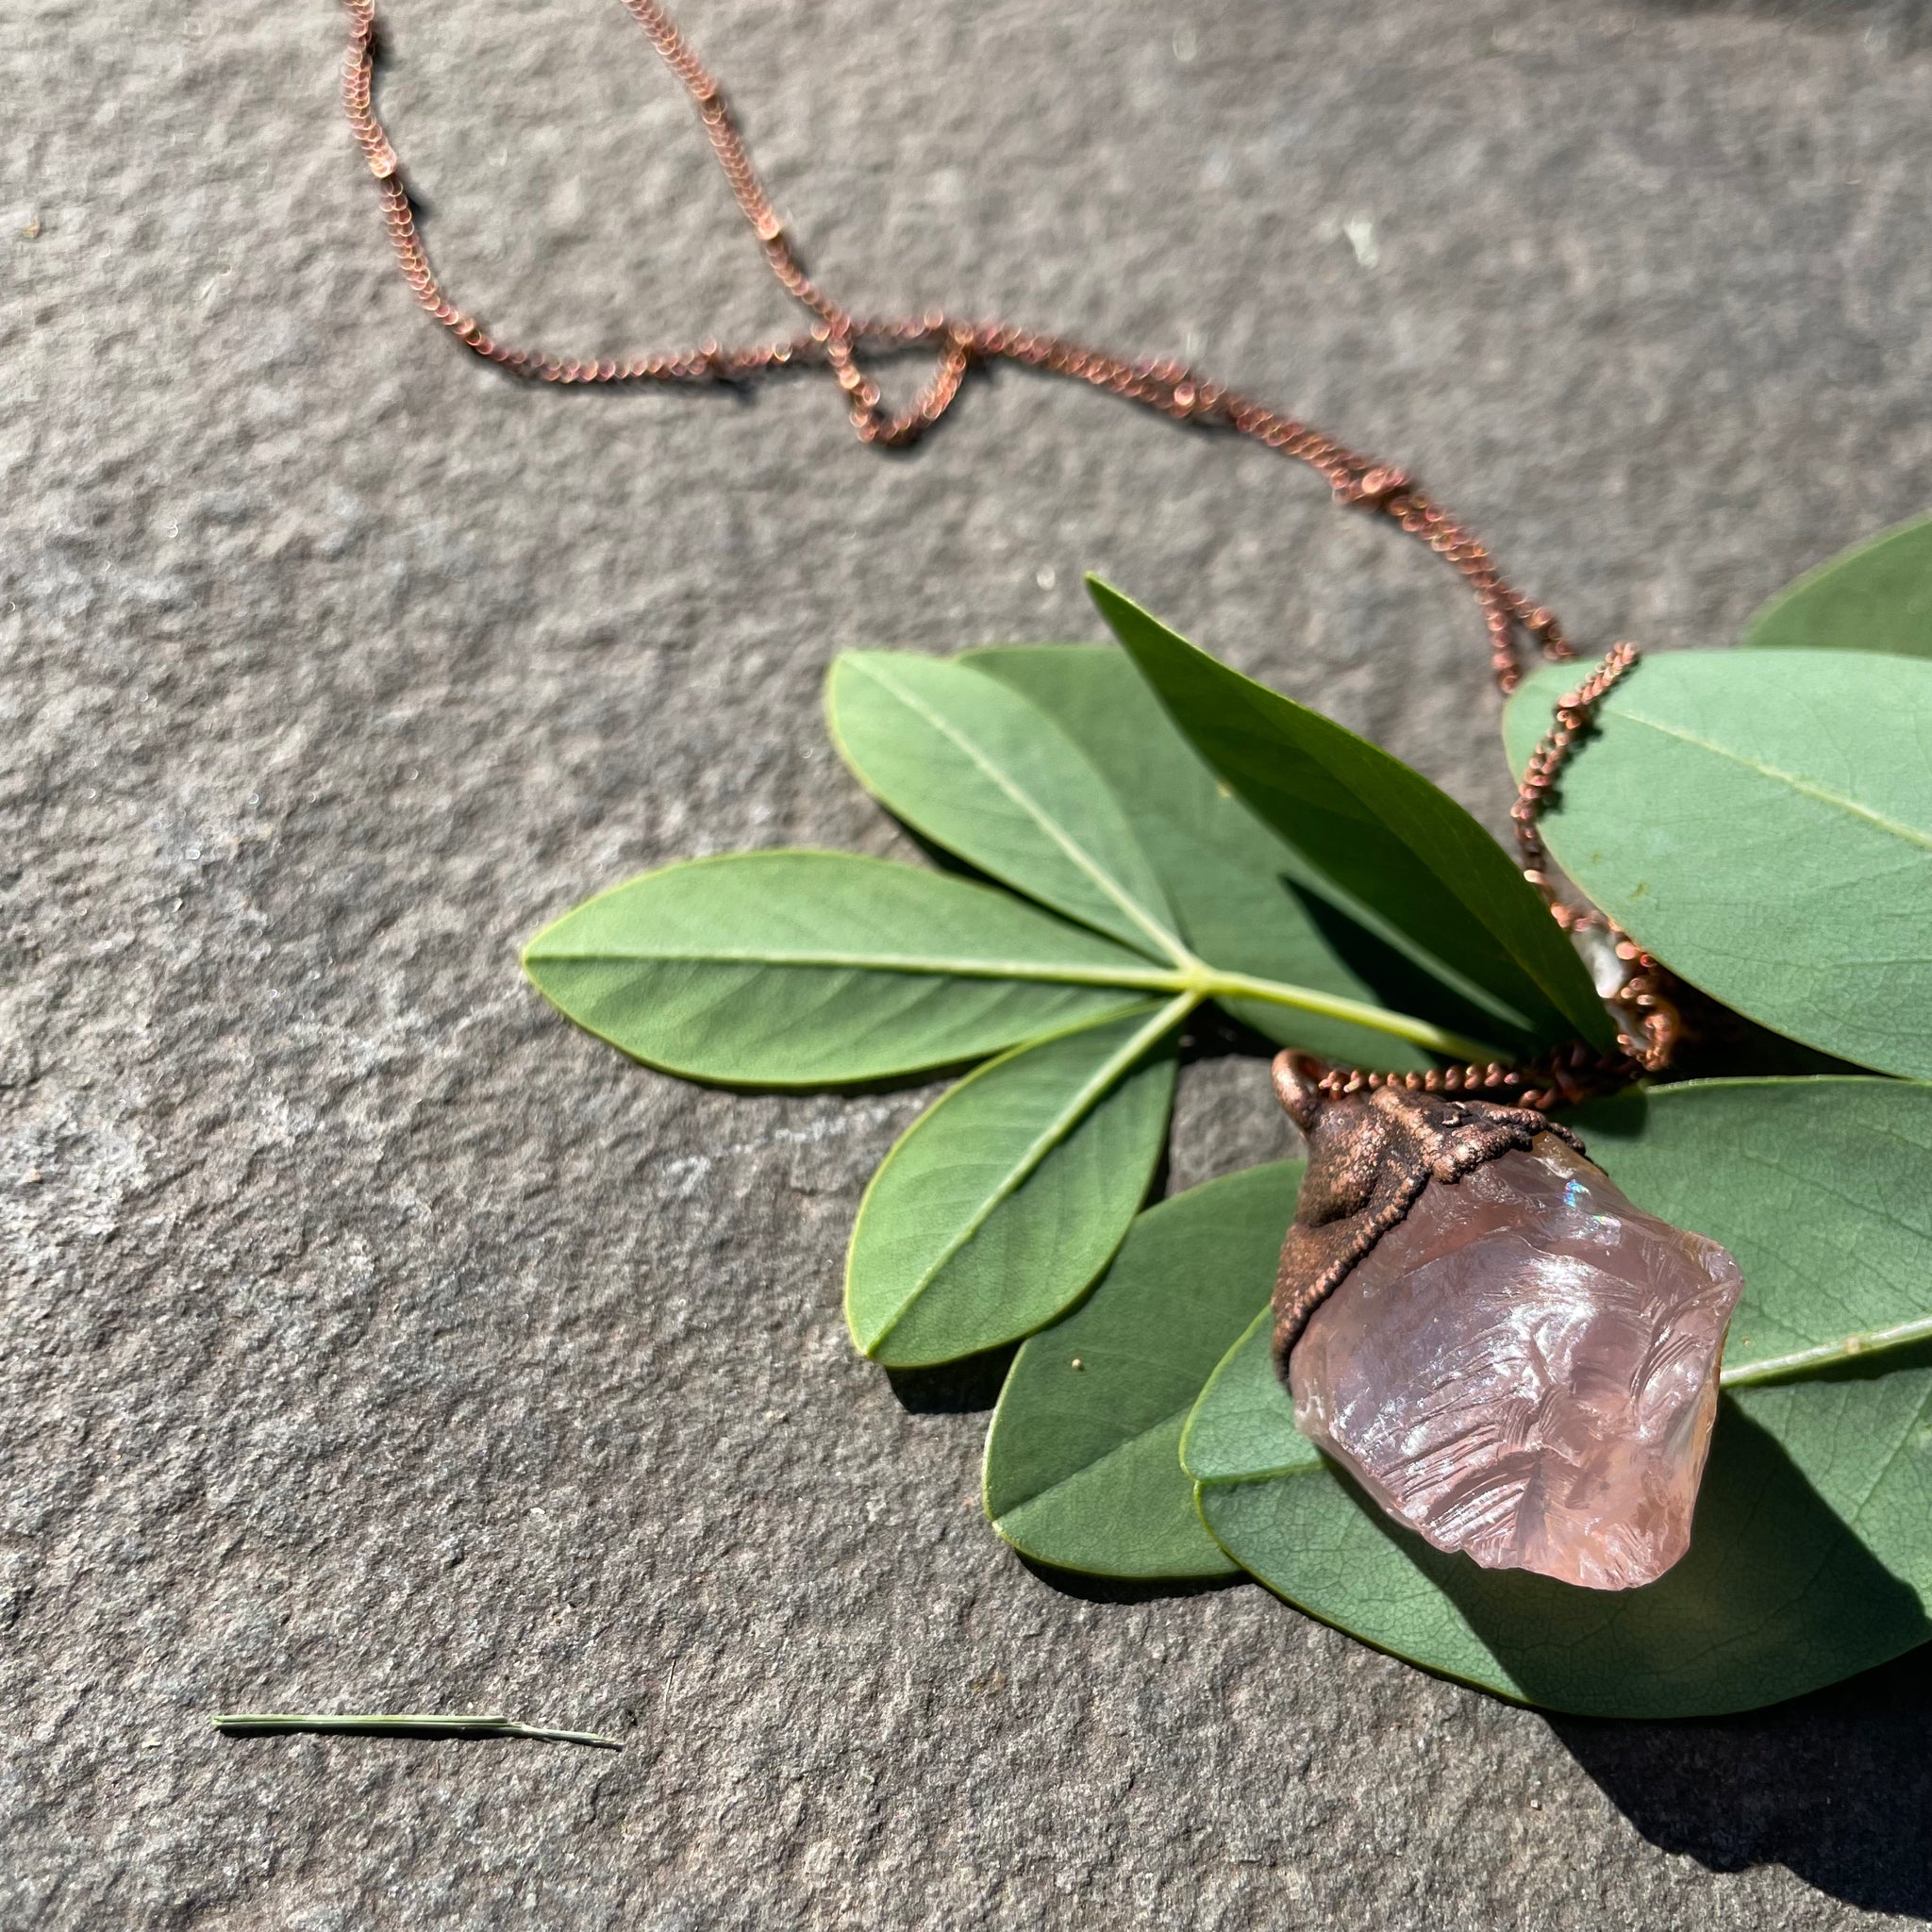 24" Rose Quartz Necklace on Copper Chain by Hawkhouse